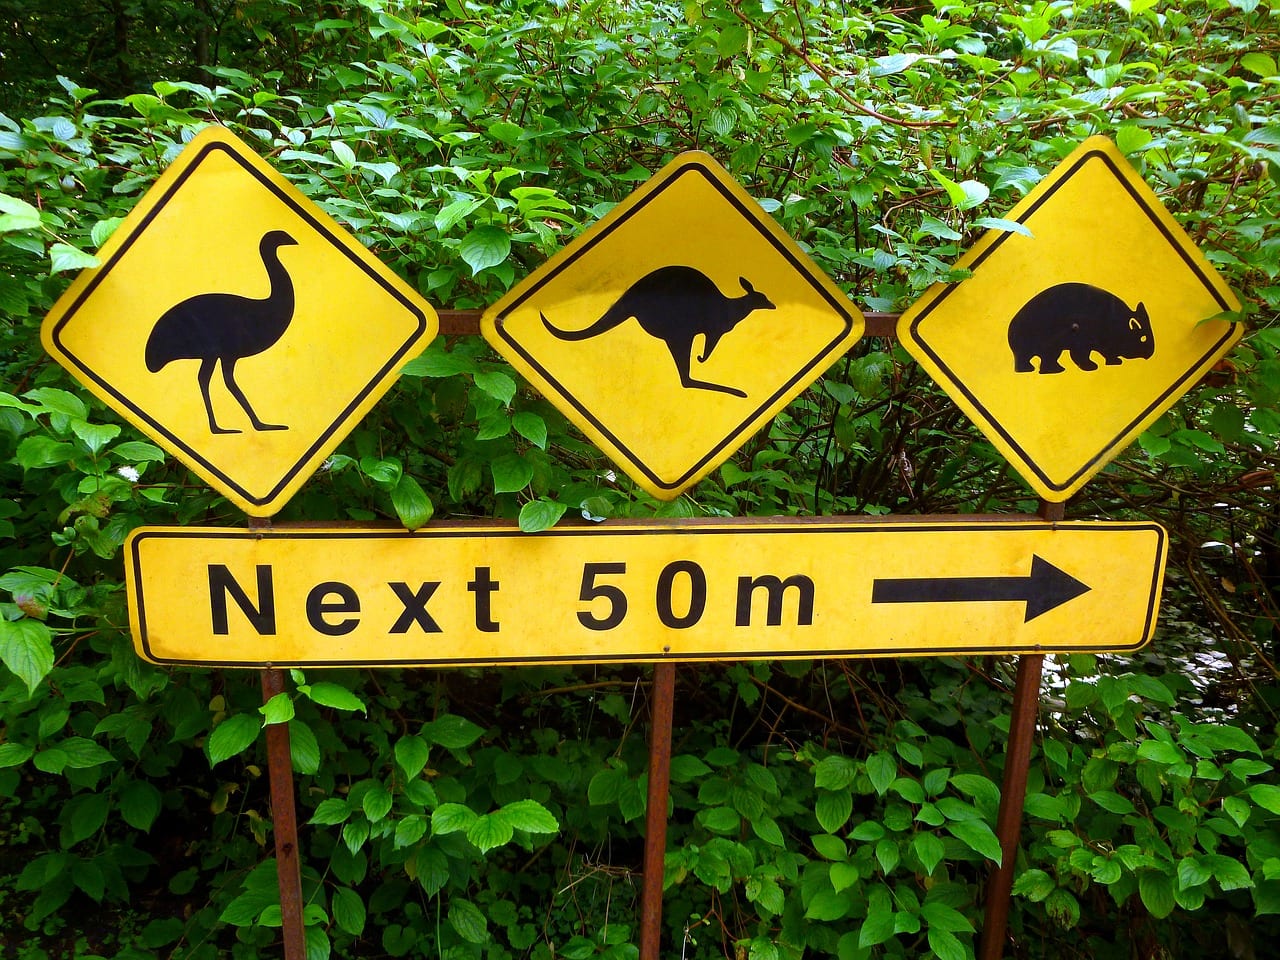 Road signs in Australia